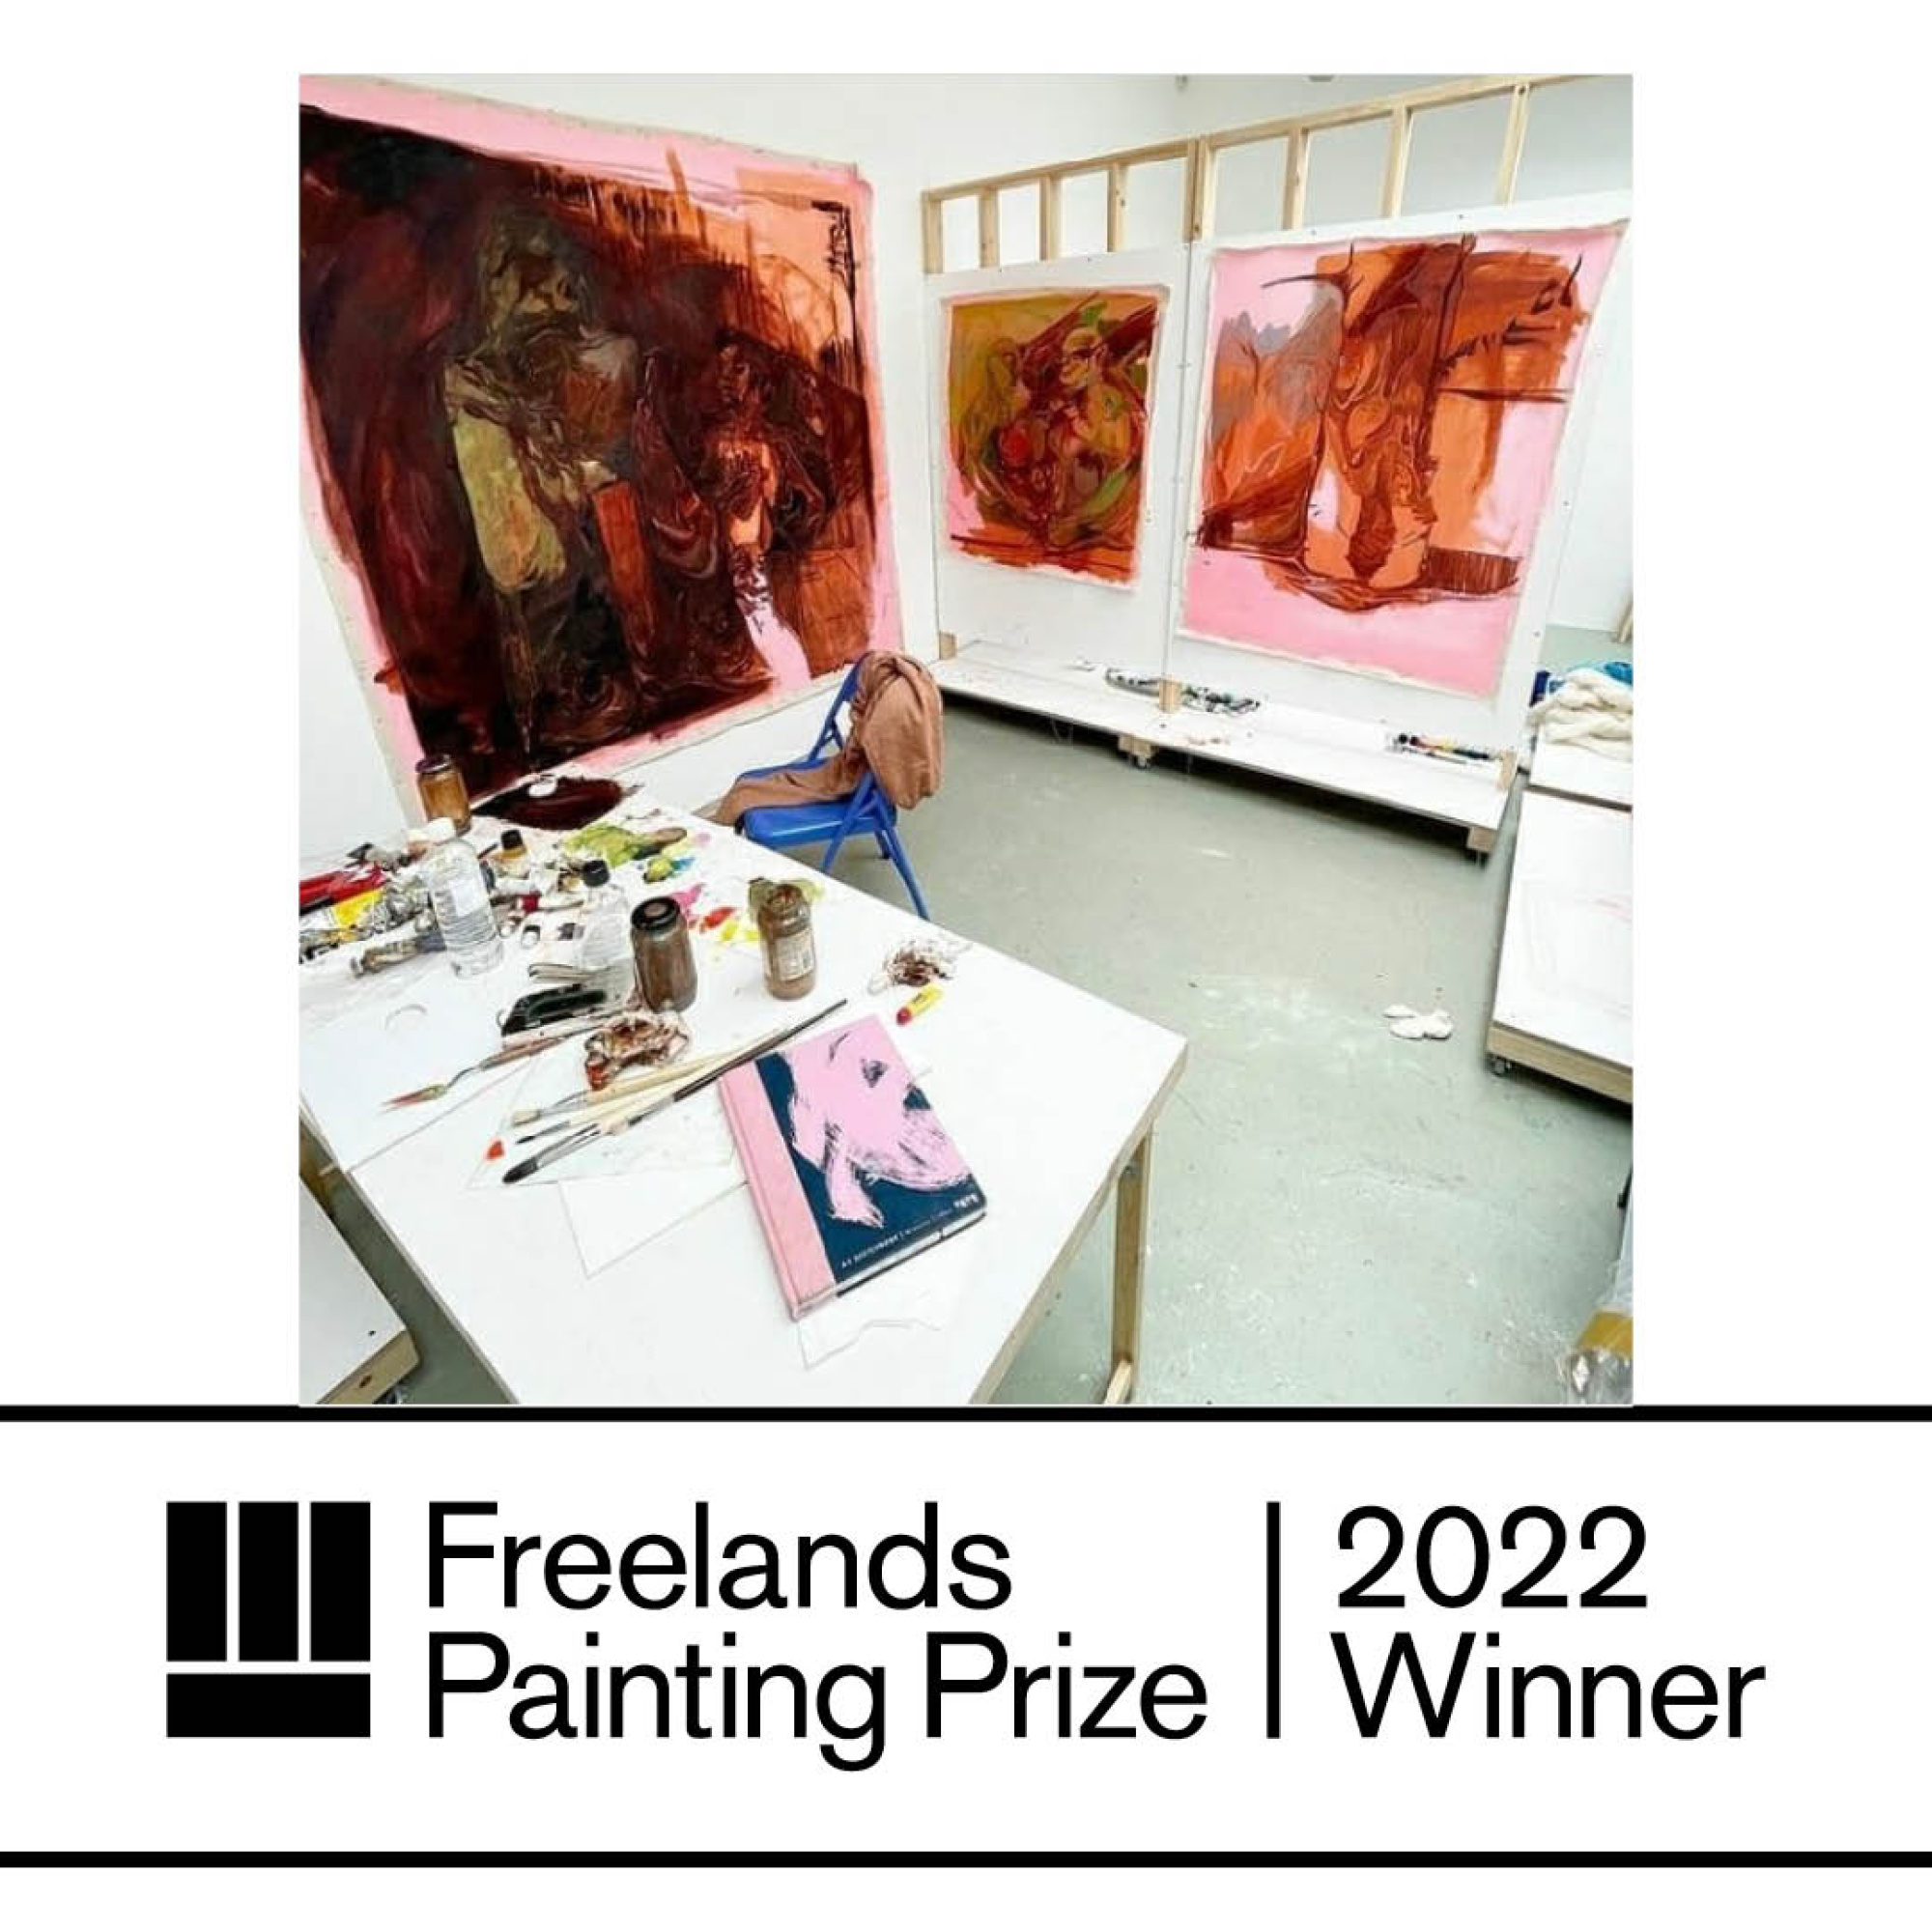 Freelands Painting Prize - Okiki Akinfe 2022 winner